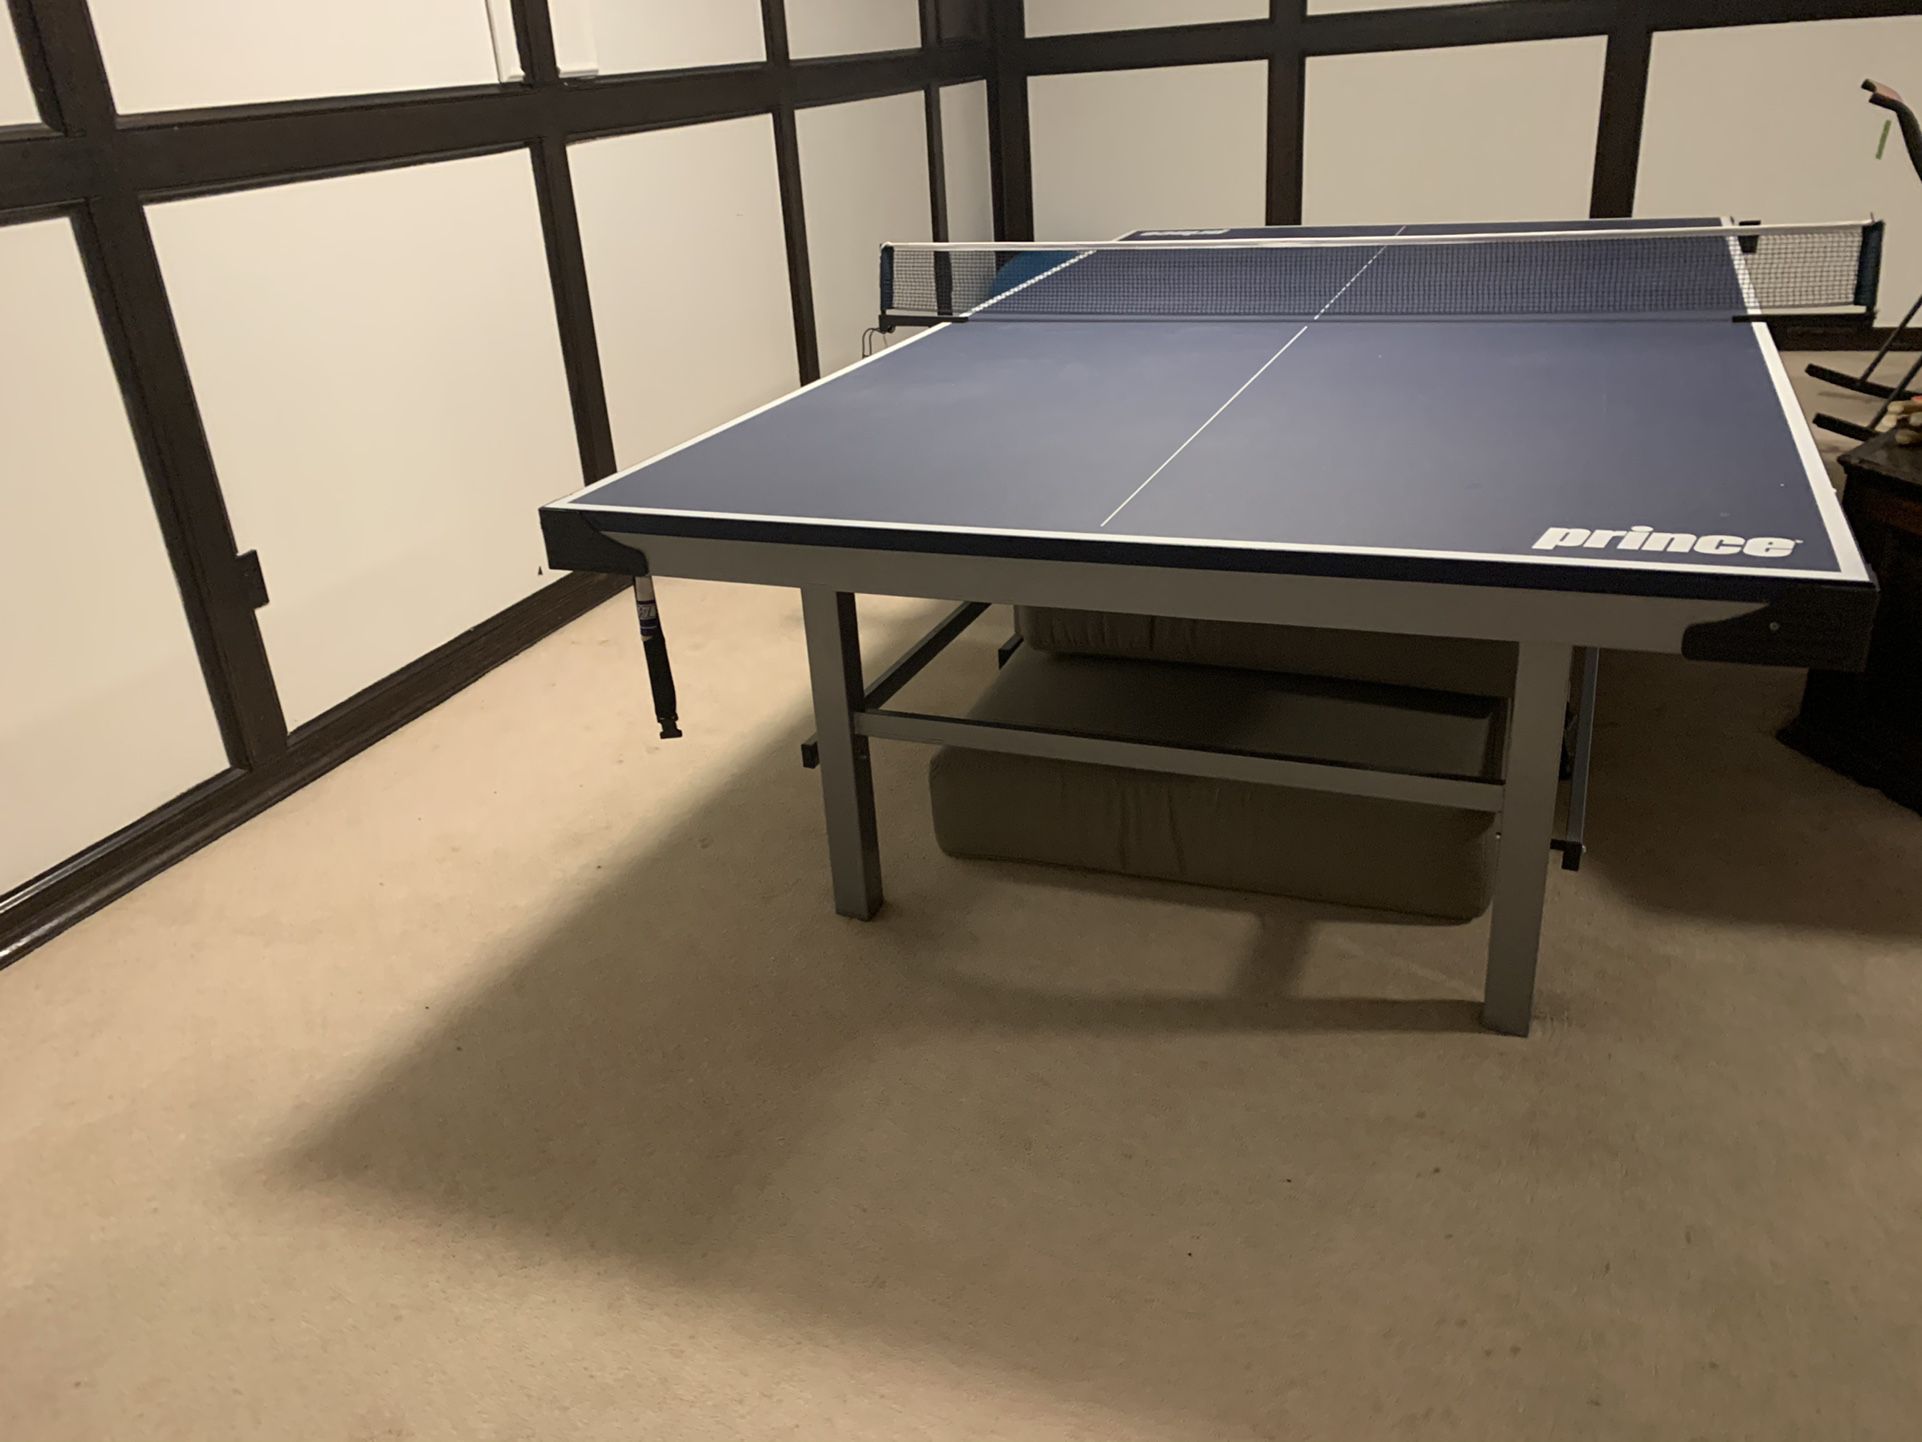 Prince Challenger Table Tennis Table w/ BONUS Accessory Rack- Blue